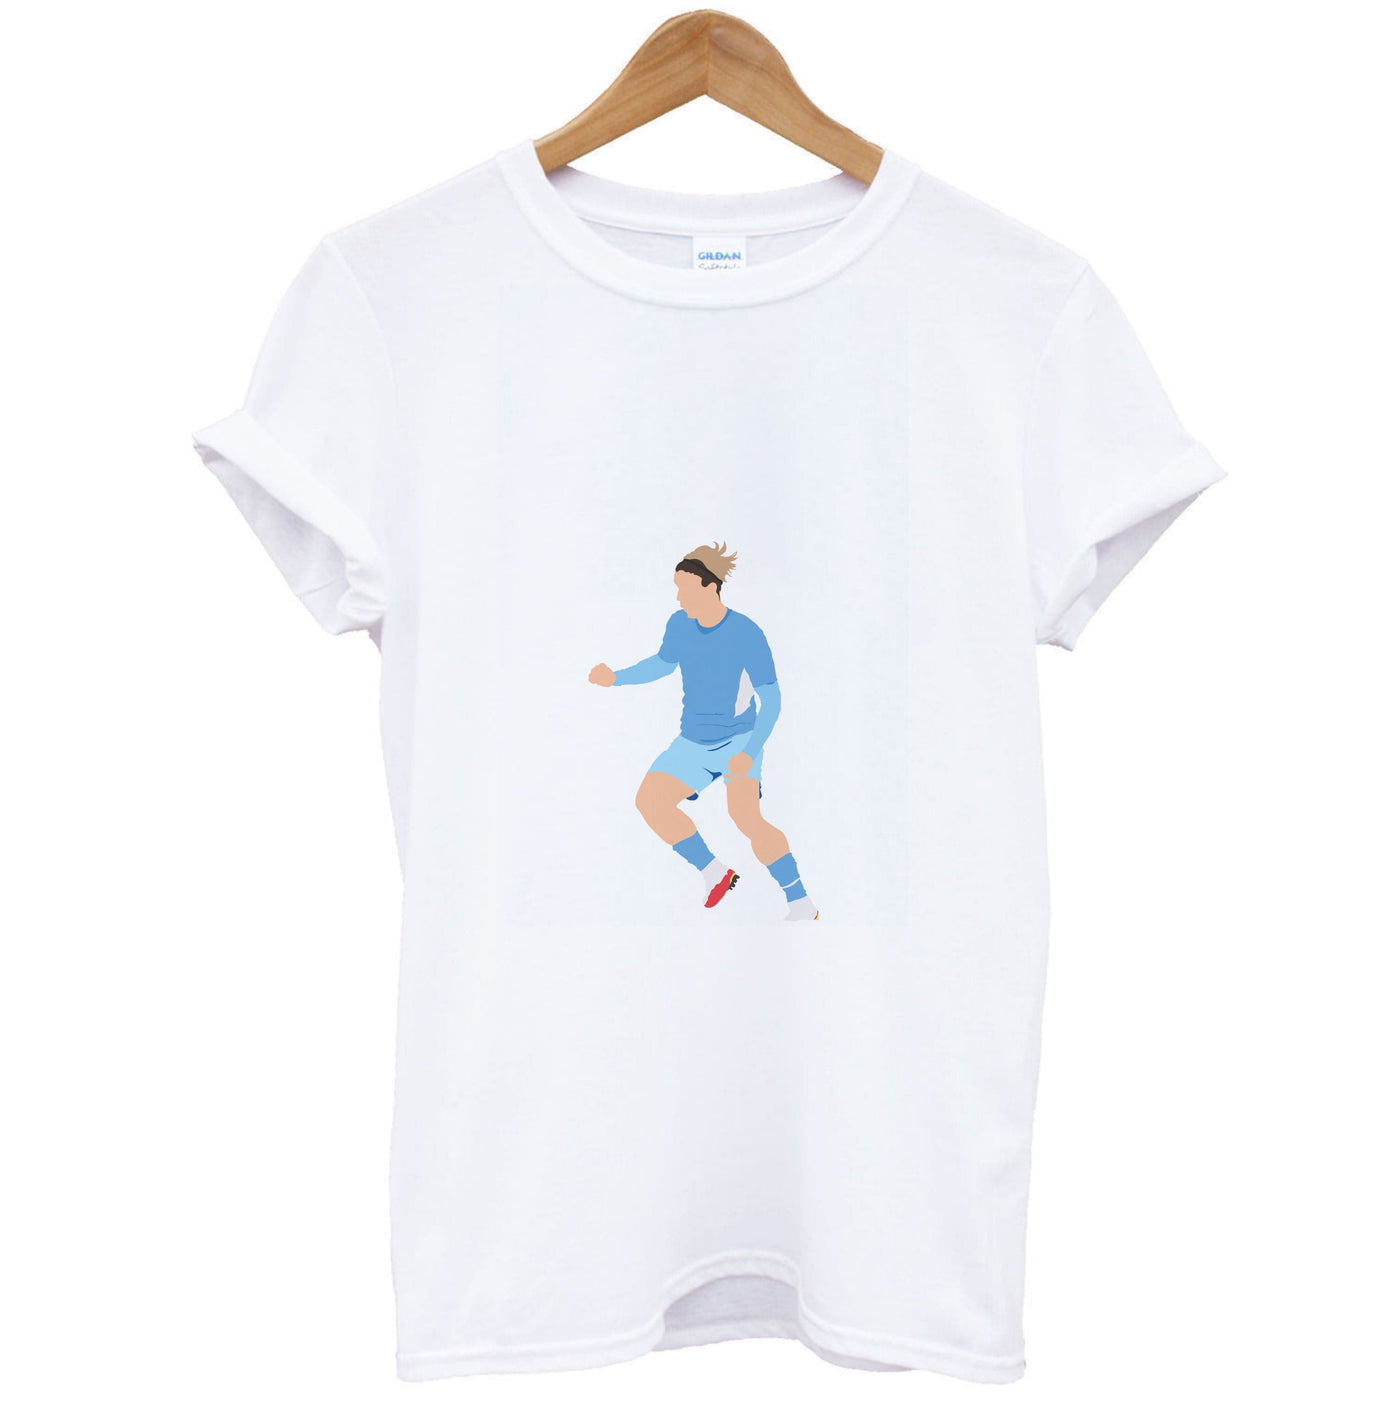 Jack Grealish - Football T-Shirt